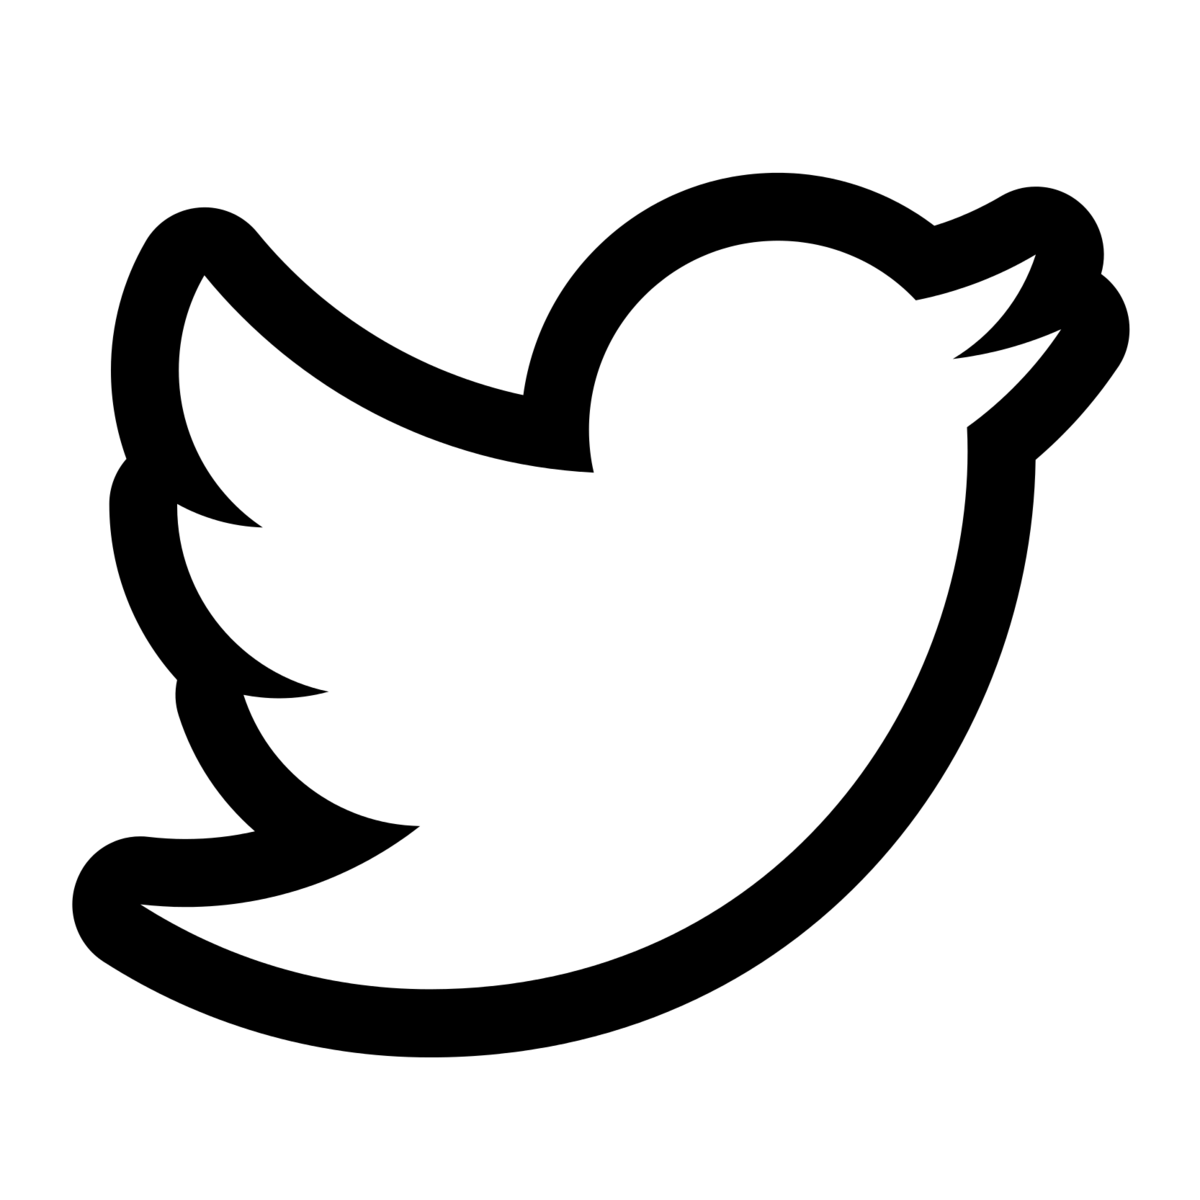 Black and White Twitter Logo - Black And White Twitter Logo Transparent_100736. Anthony's High